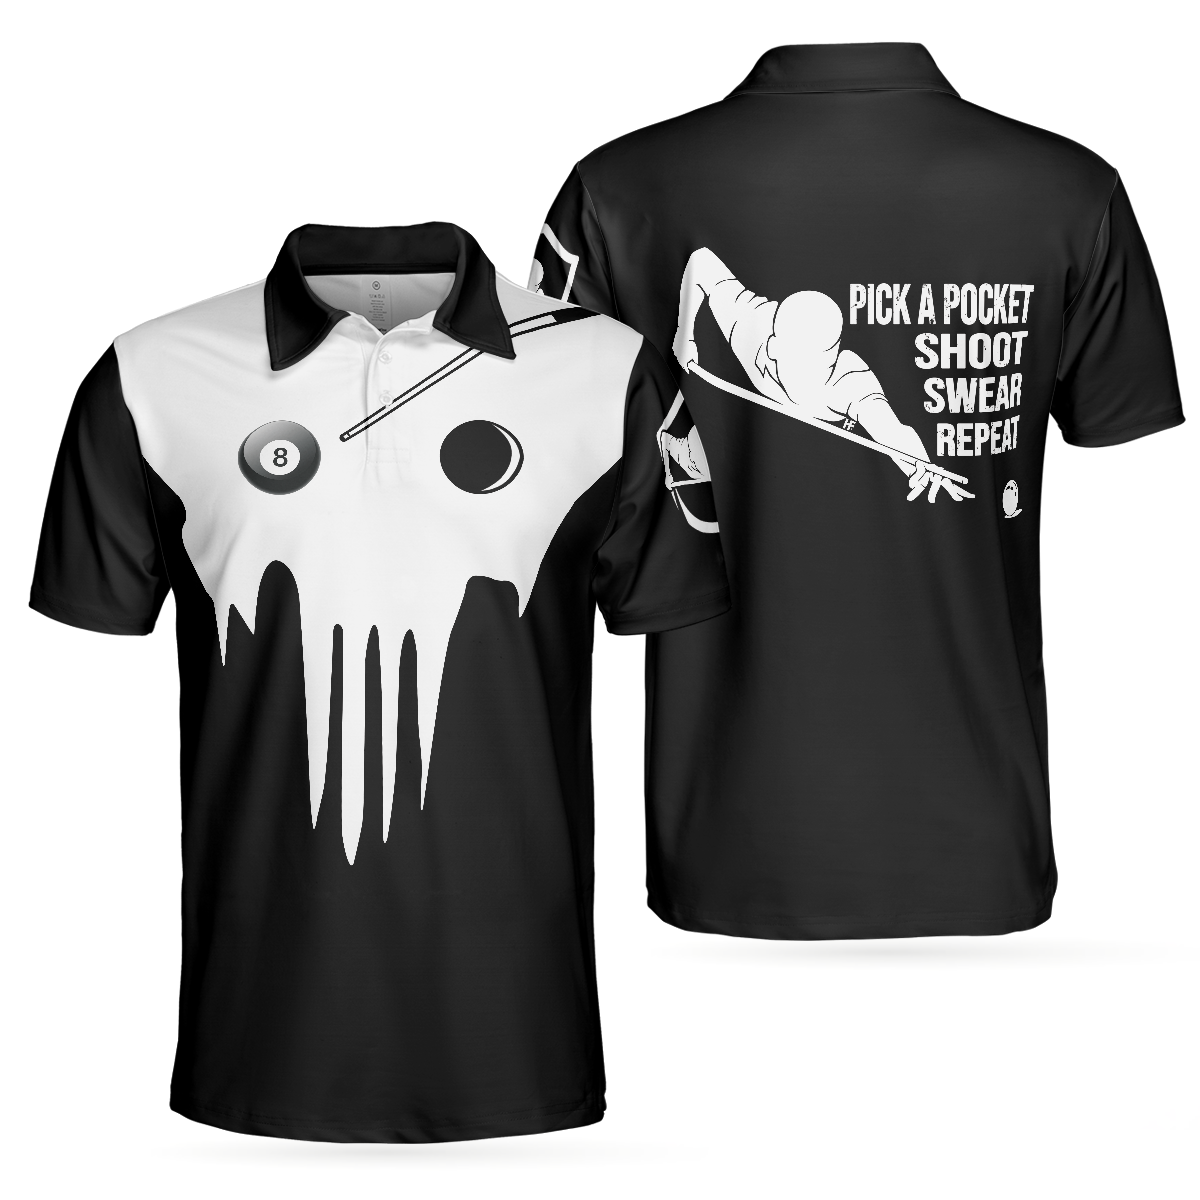 Skull Billiards Polo Shirt, Black And White Billiards Shirt For Billiards Lovers, Basic Shirt Design For Men - Perfect Gift For Men, Billiard Players